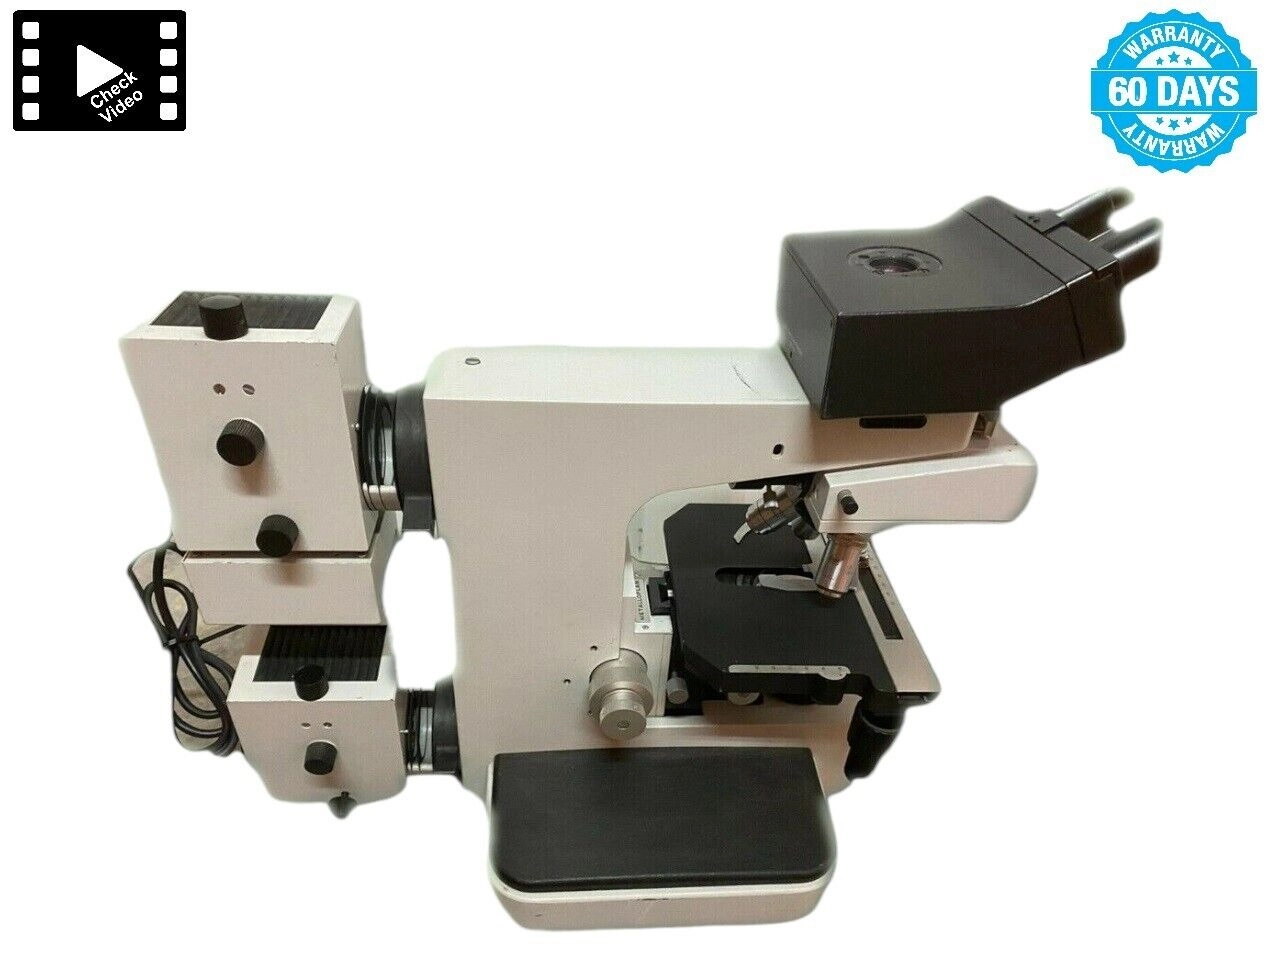 Leitz Metalloplan Microscope With Three Objectives